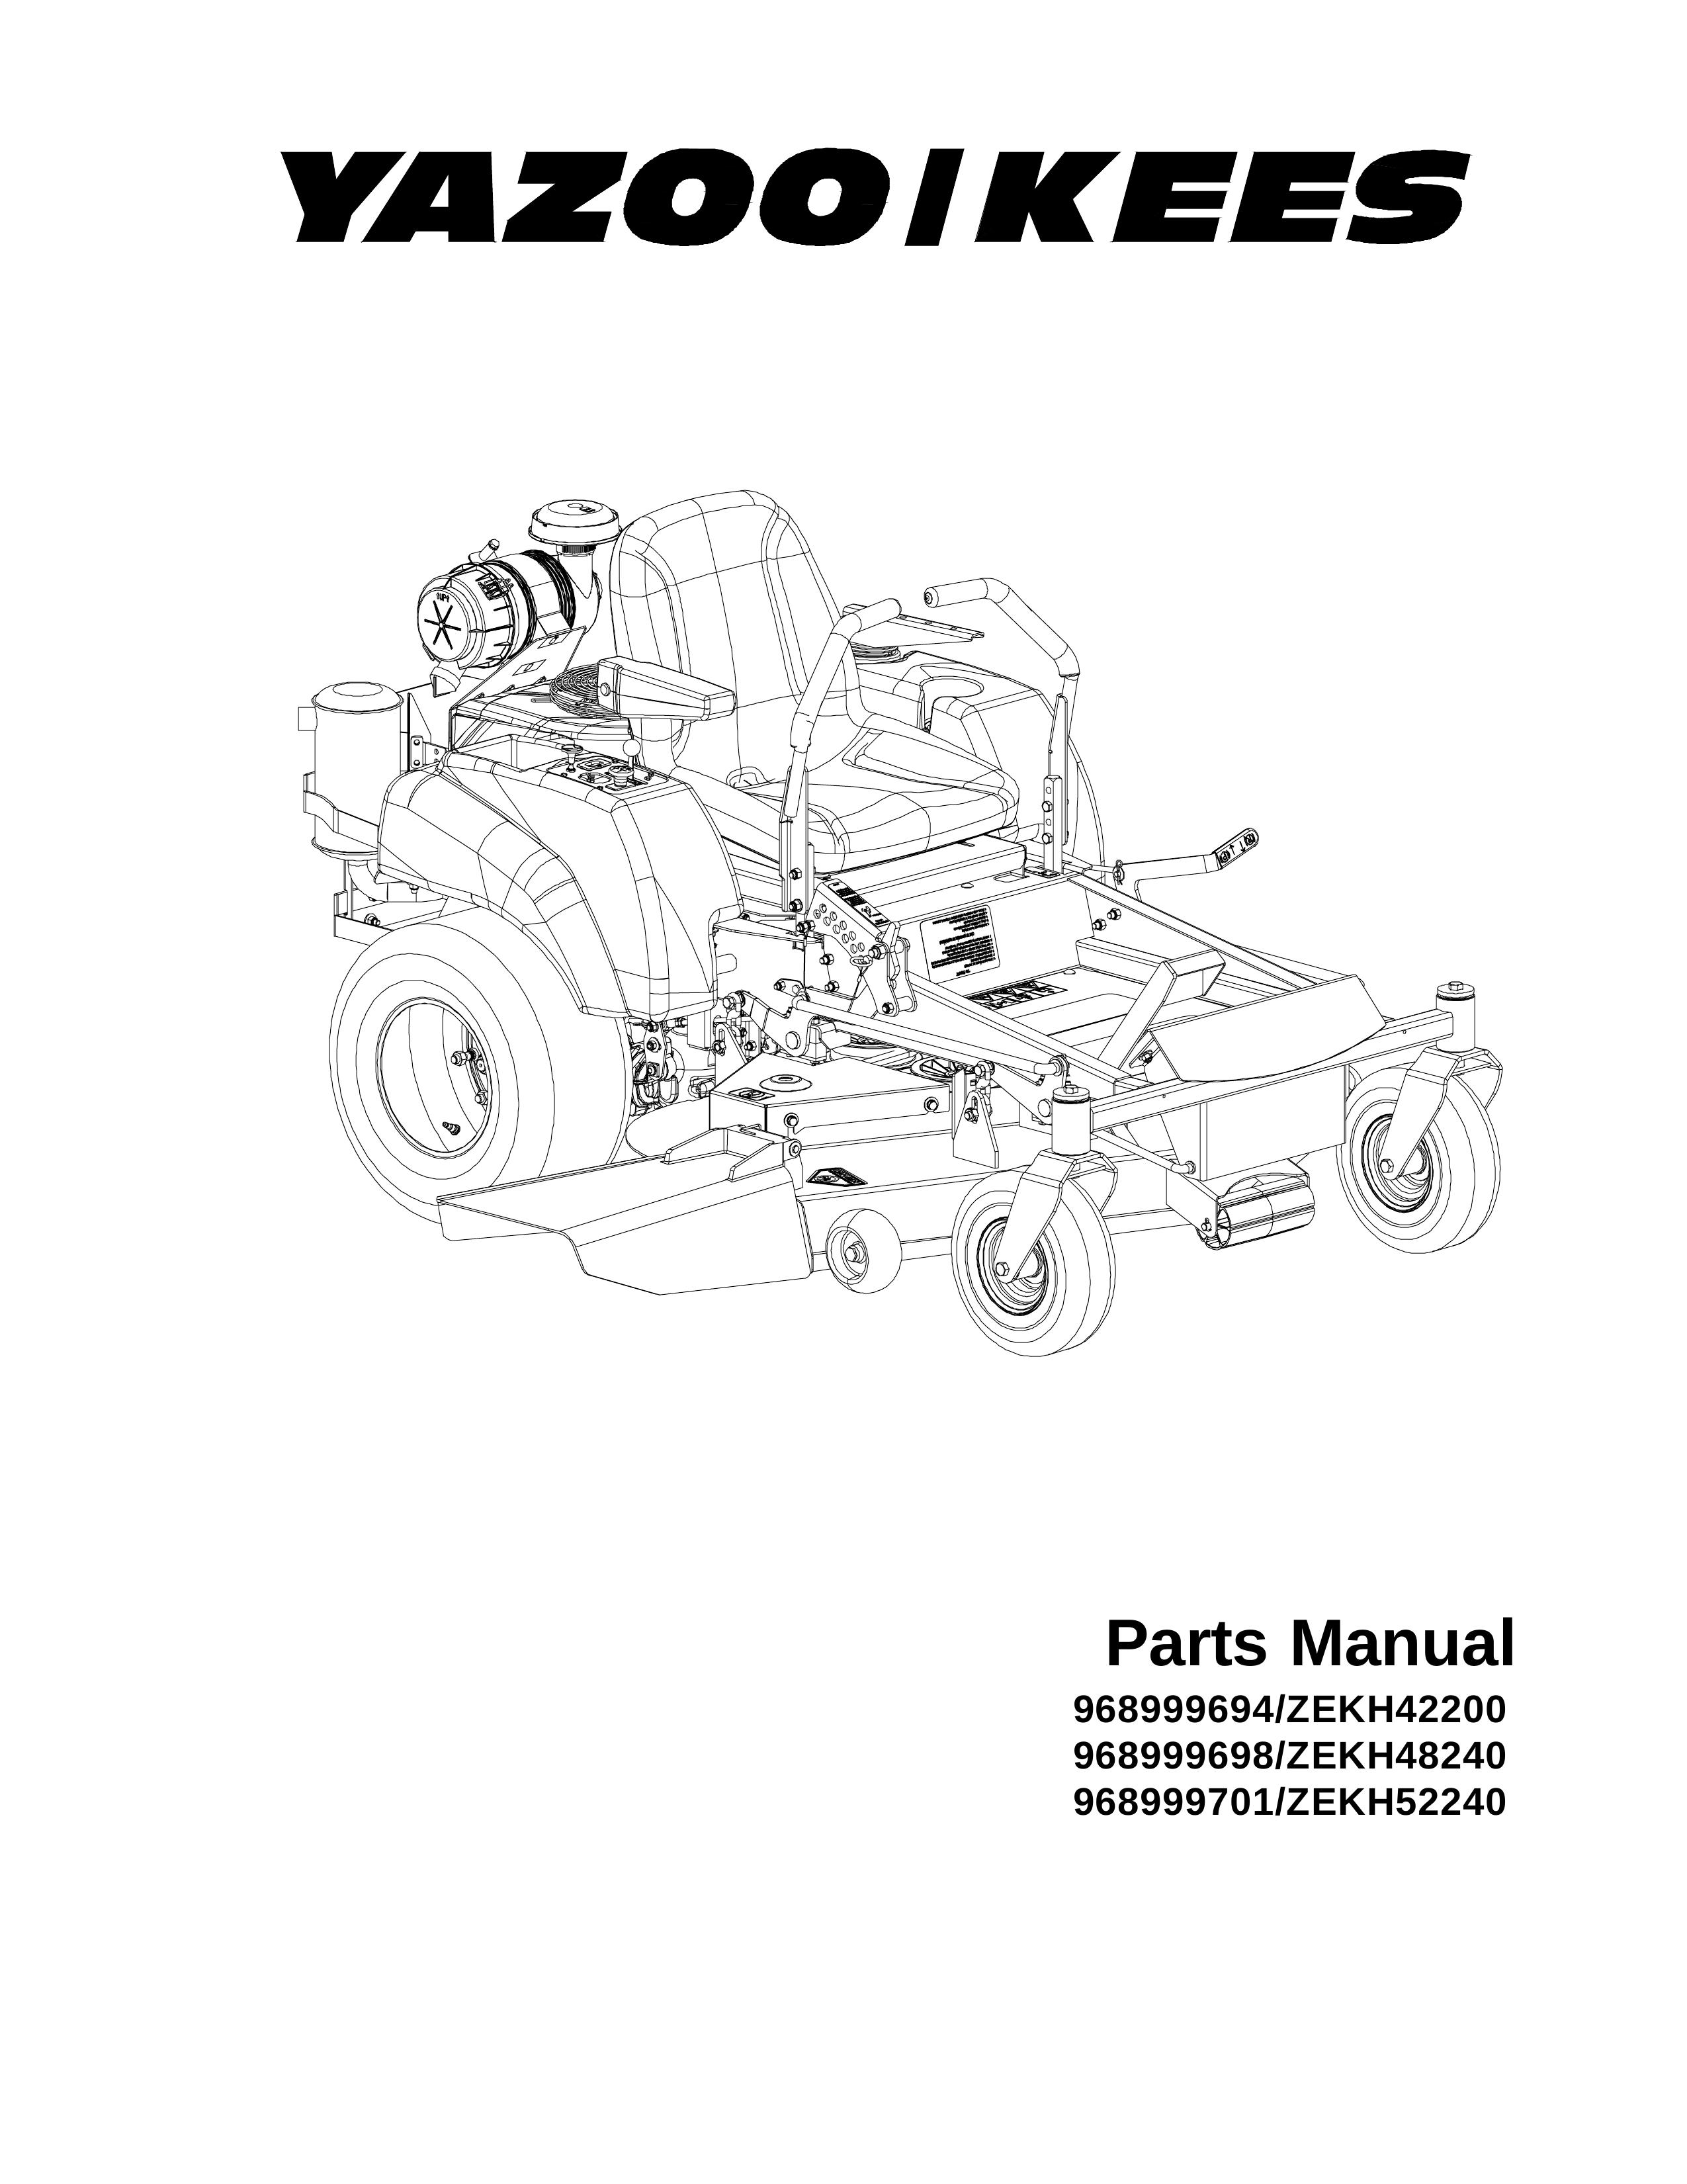 Yazoo/Kees 968999694/ZEKH42200 Lawn Mower User Manual